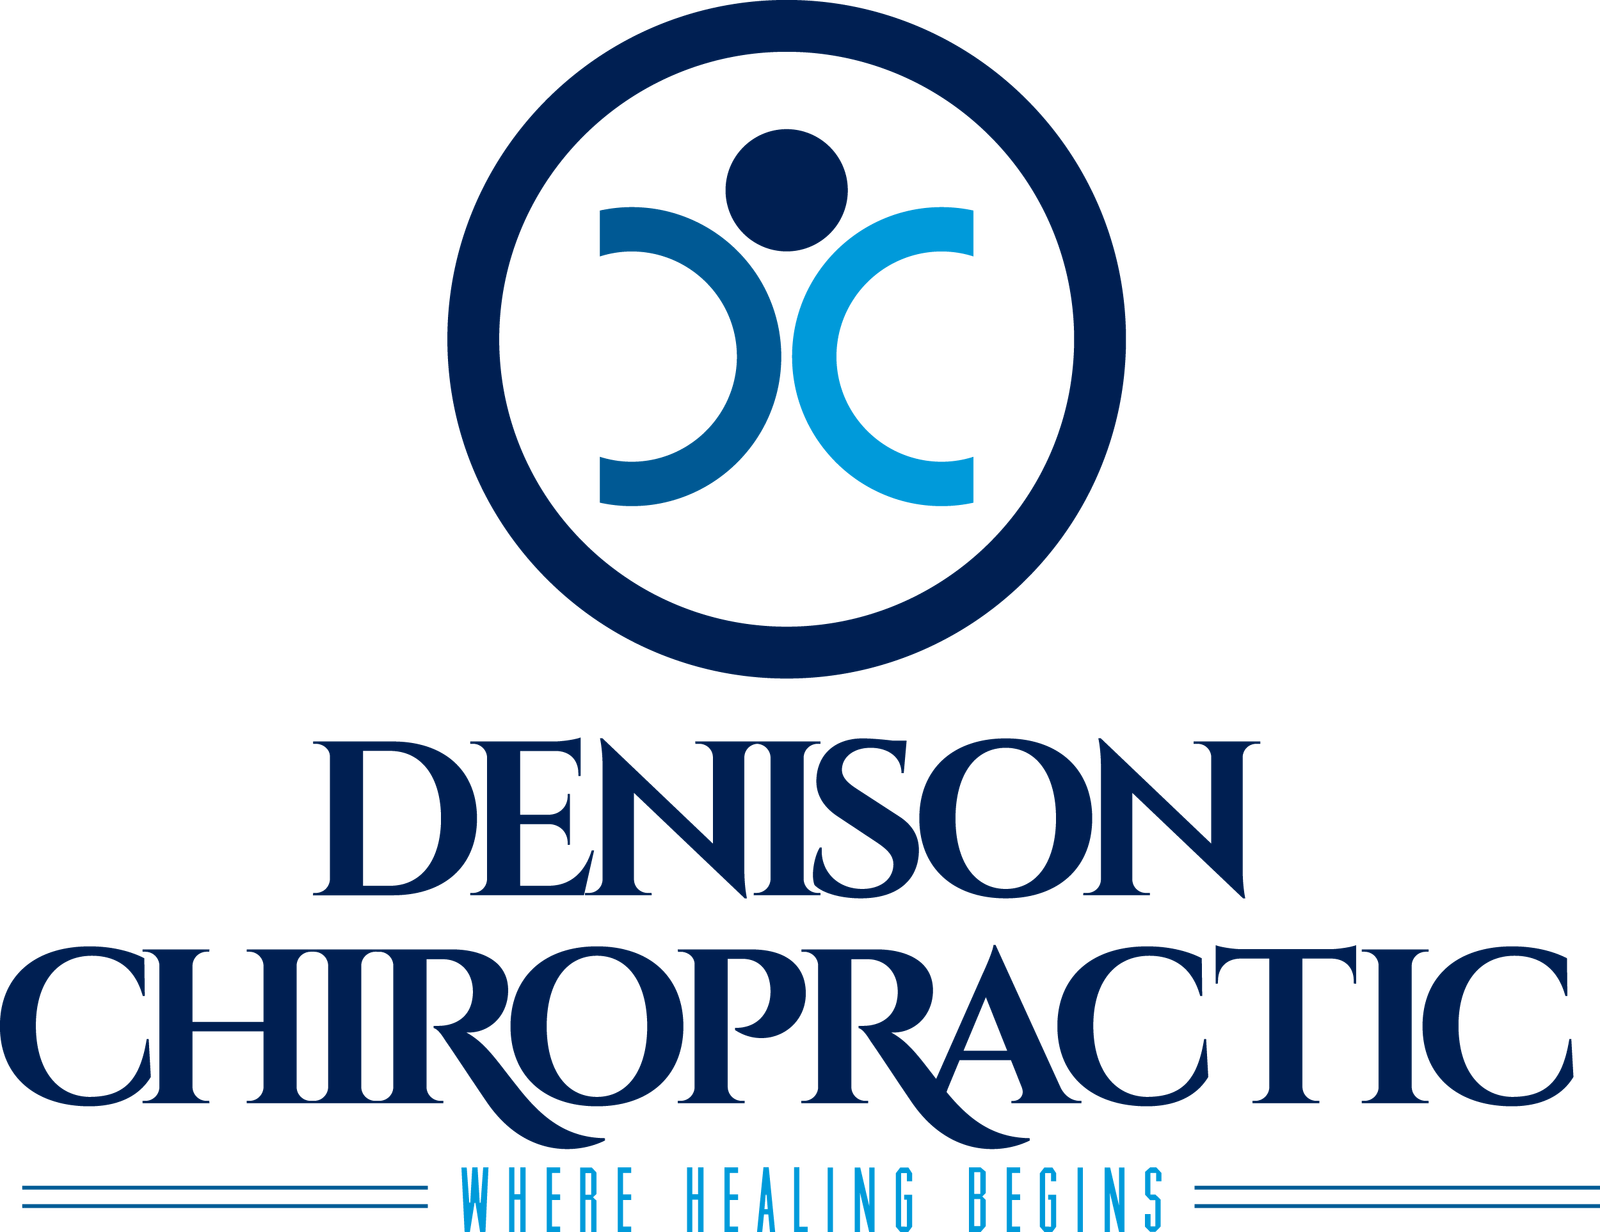 Denison Chiropractic